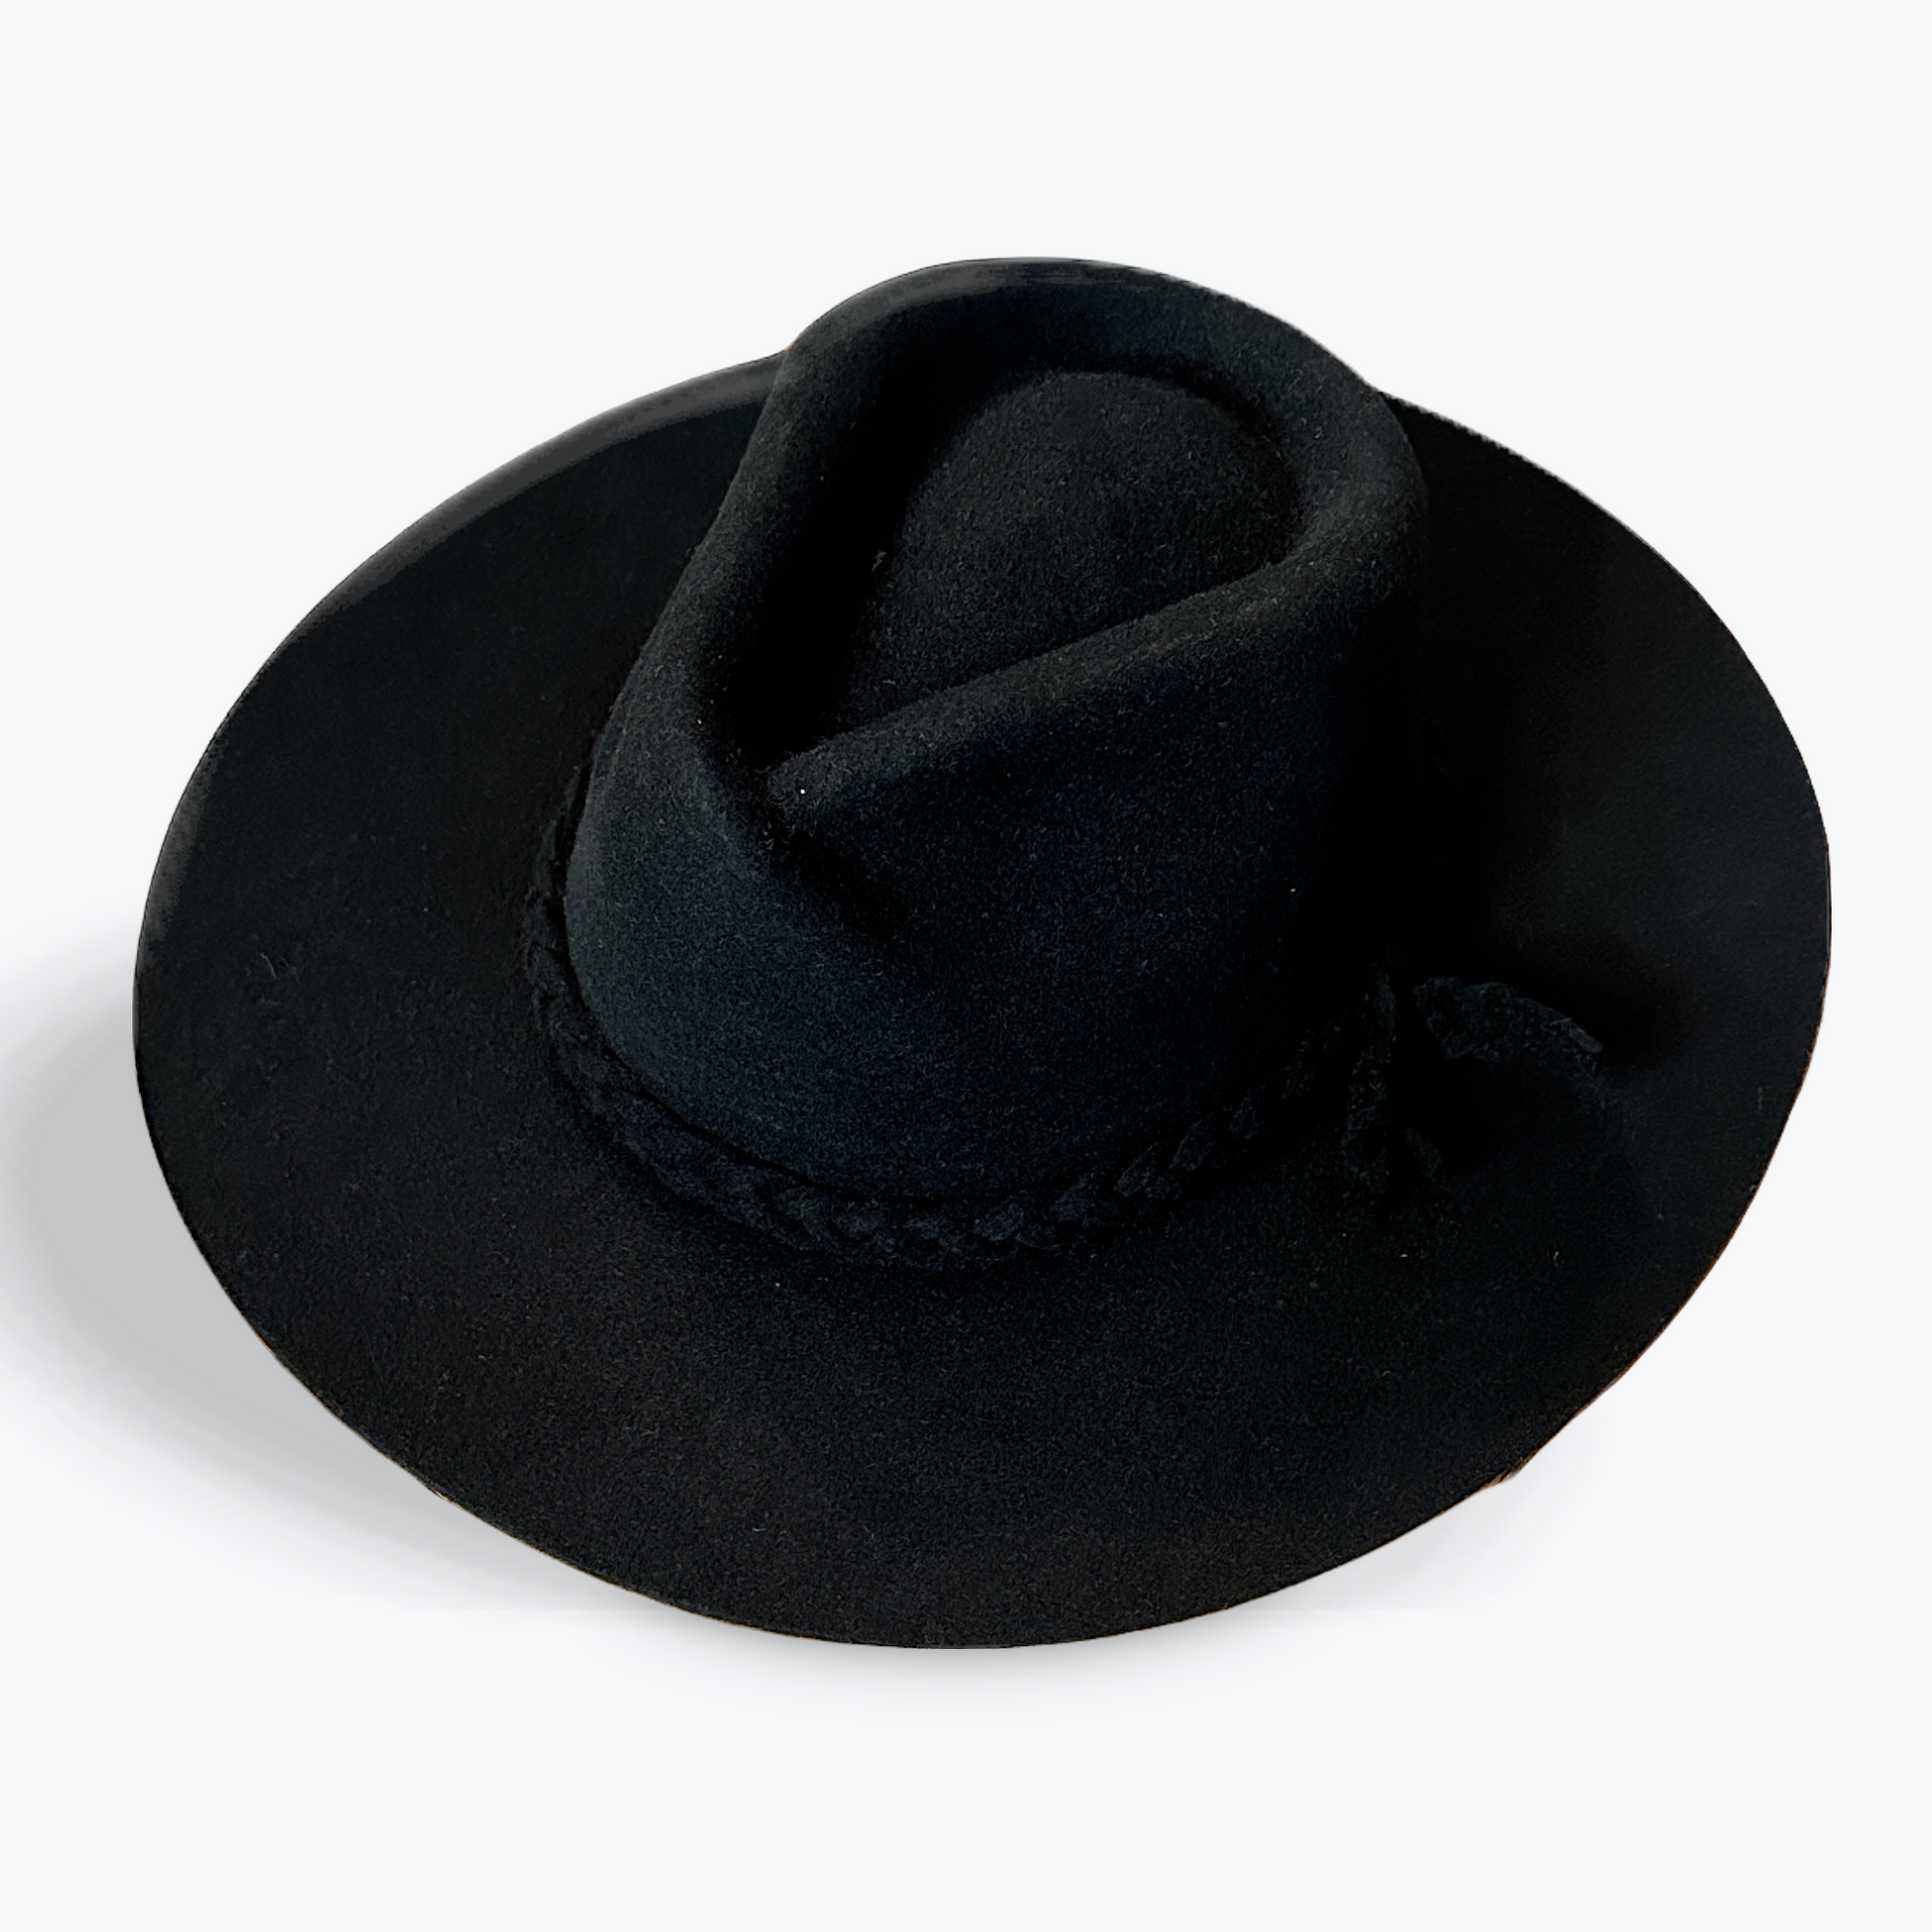 Criss Cross Black Rancher Hat - The Hip Hat 